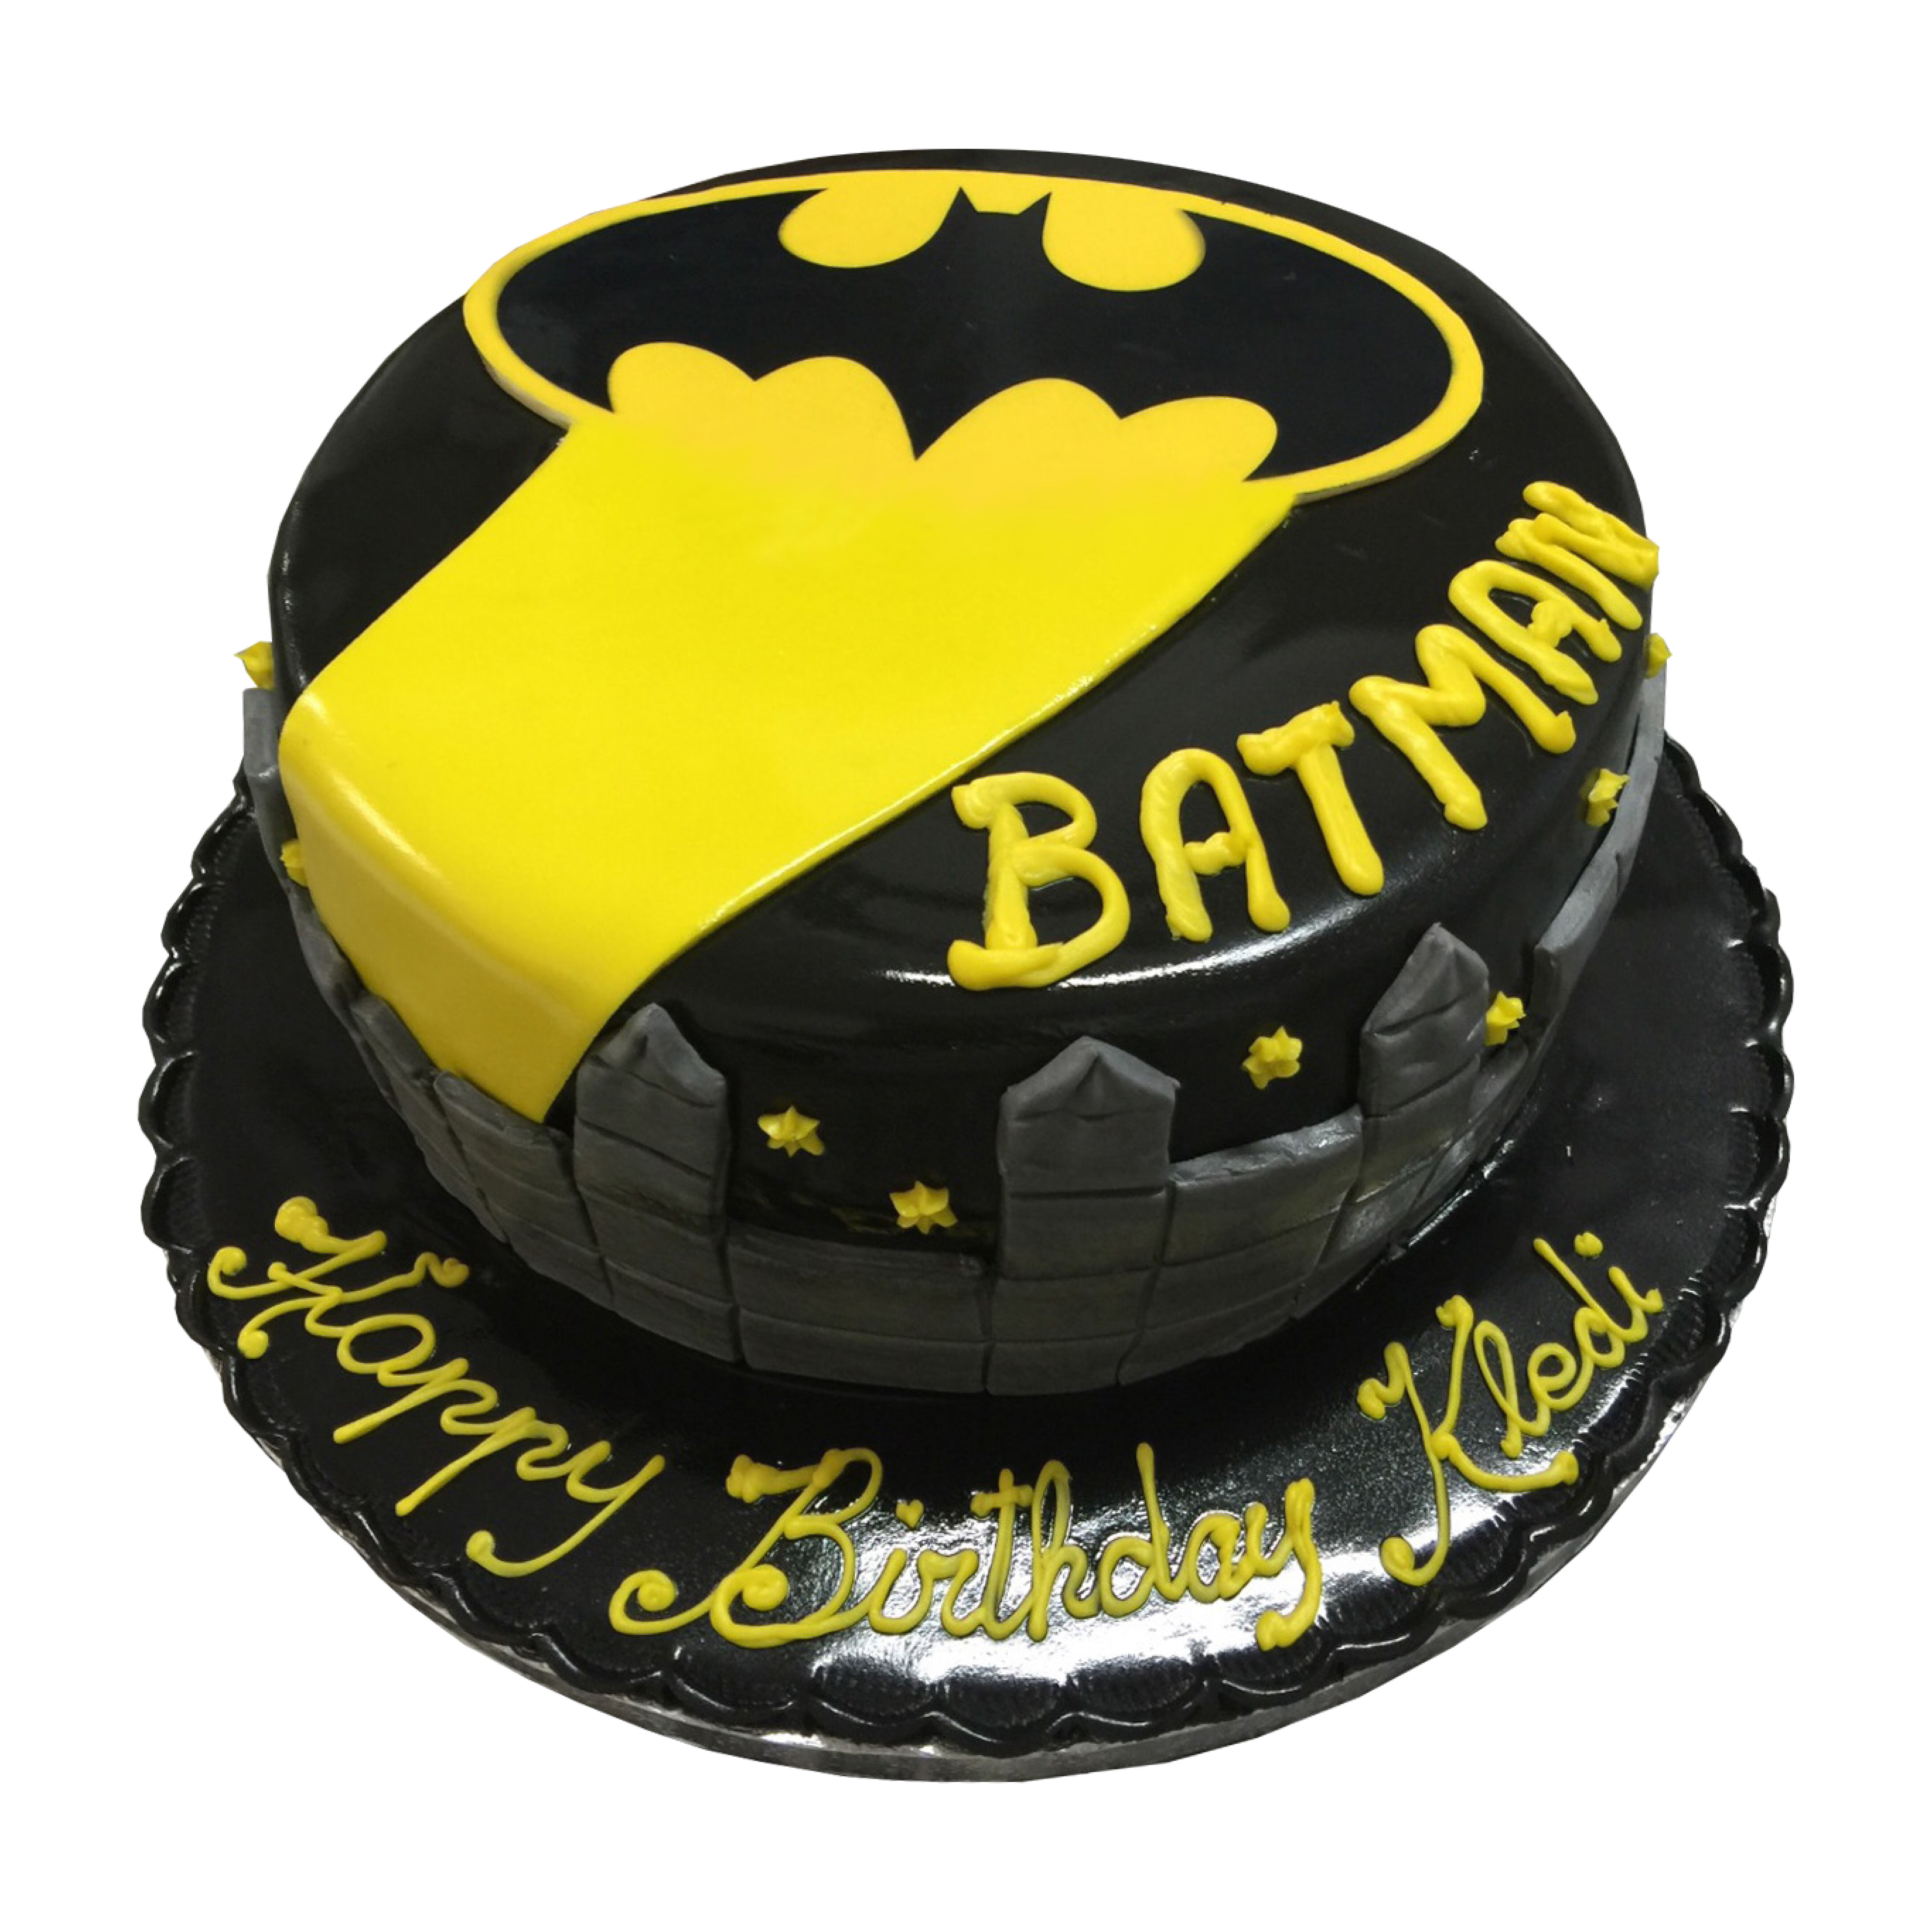 Cake Mania Batman - treeab